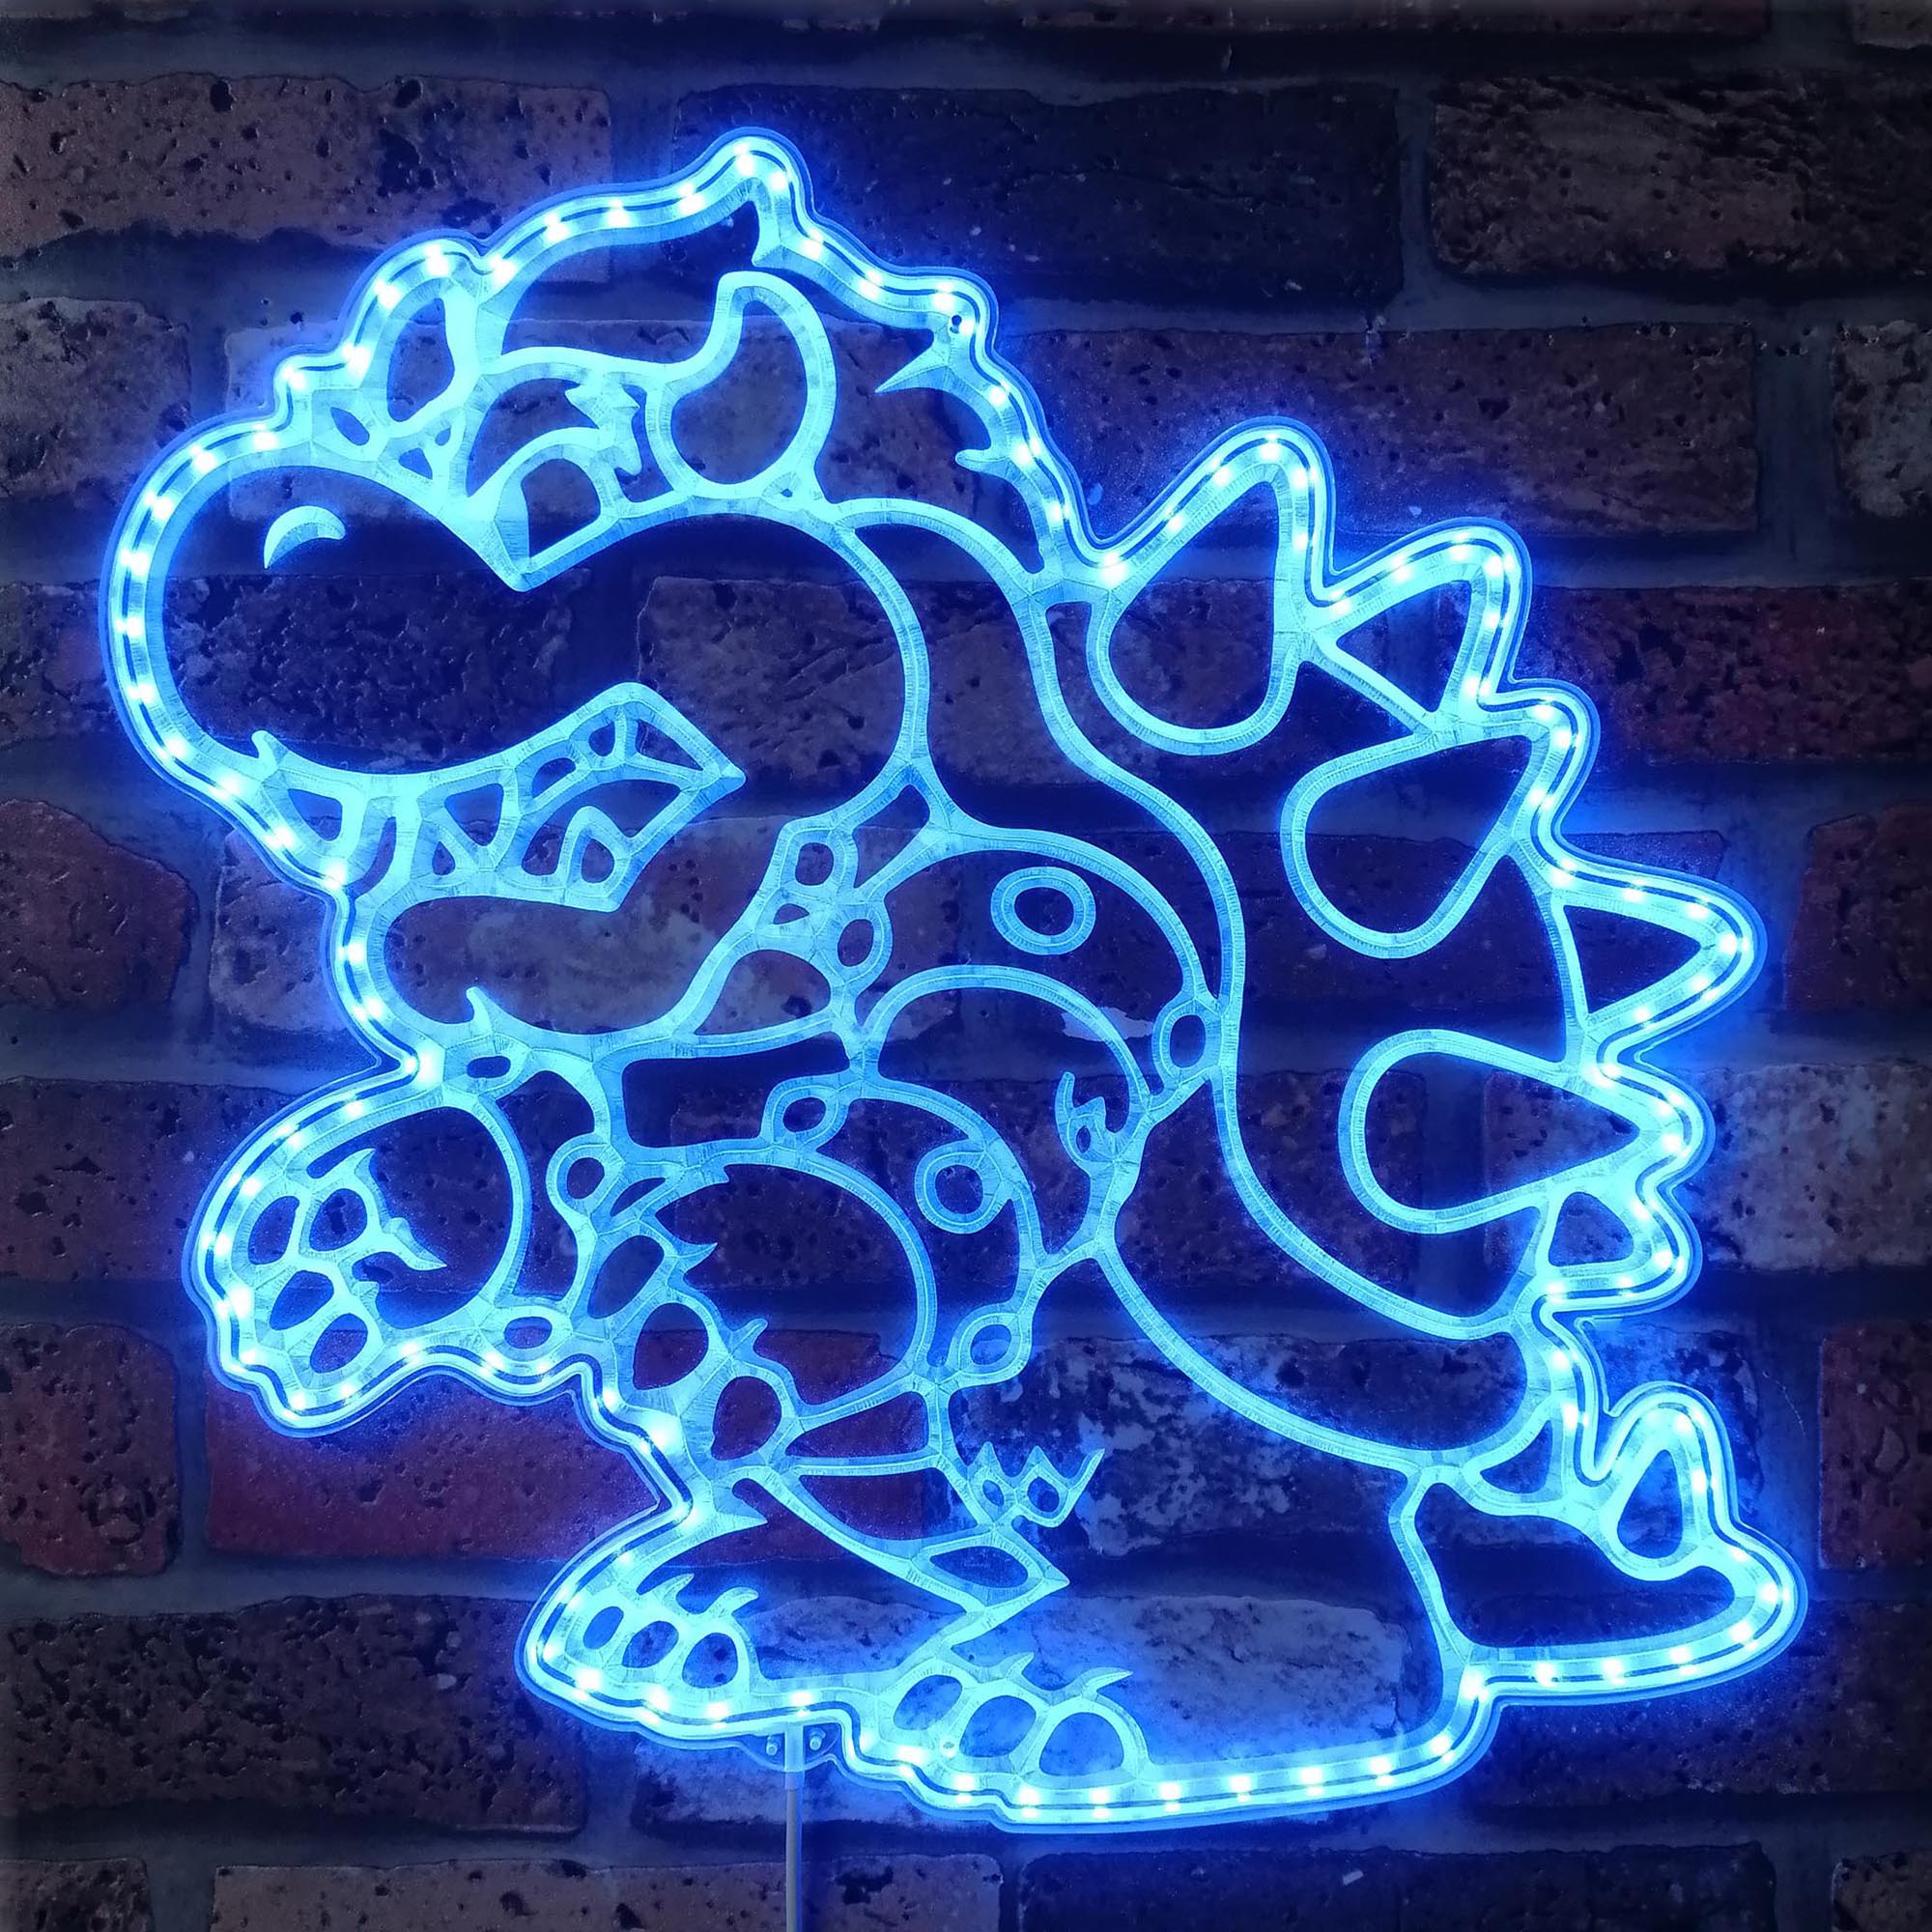 Super Mario Bowser Dynamic RGB Neon Edge Lit LED Sign